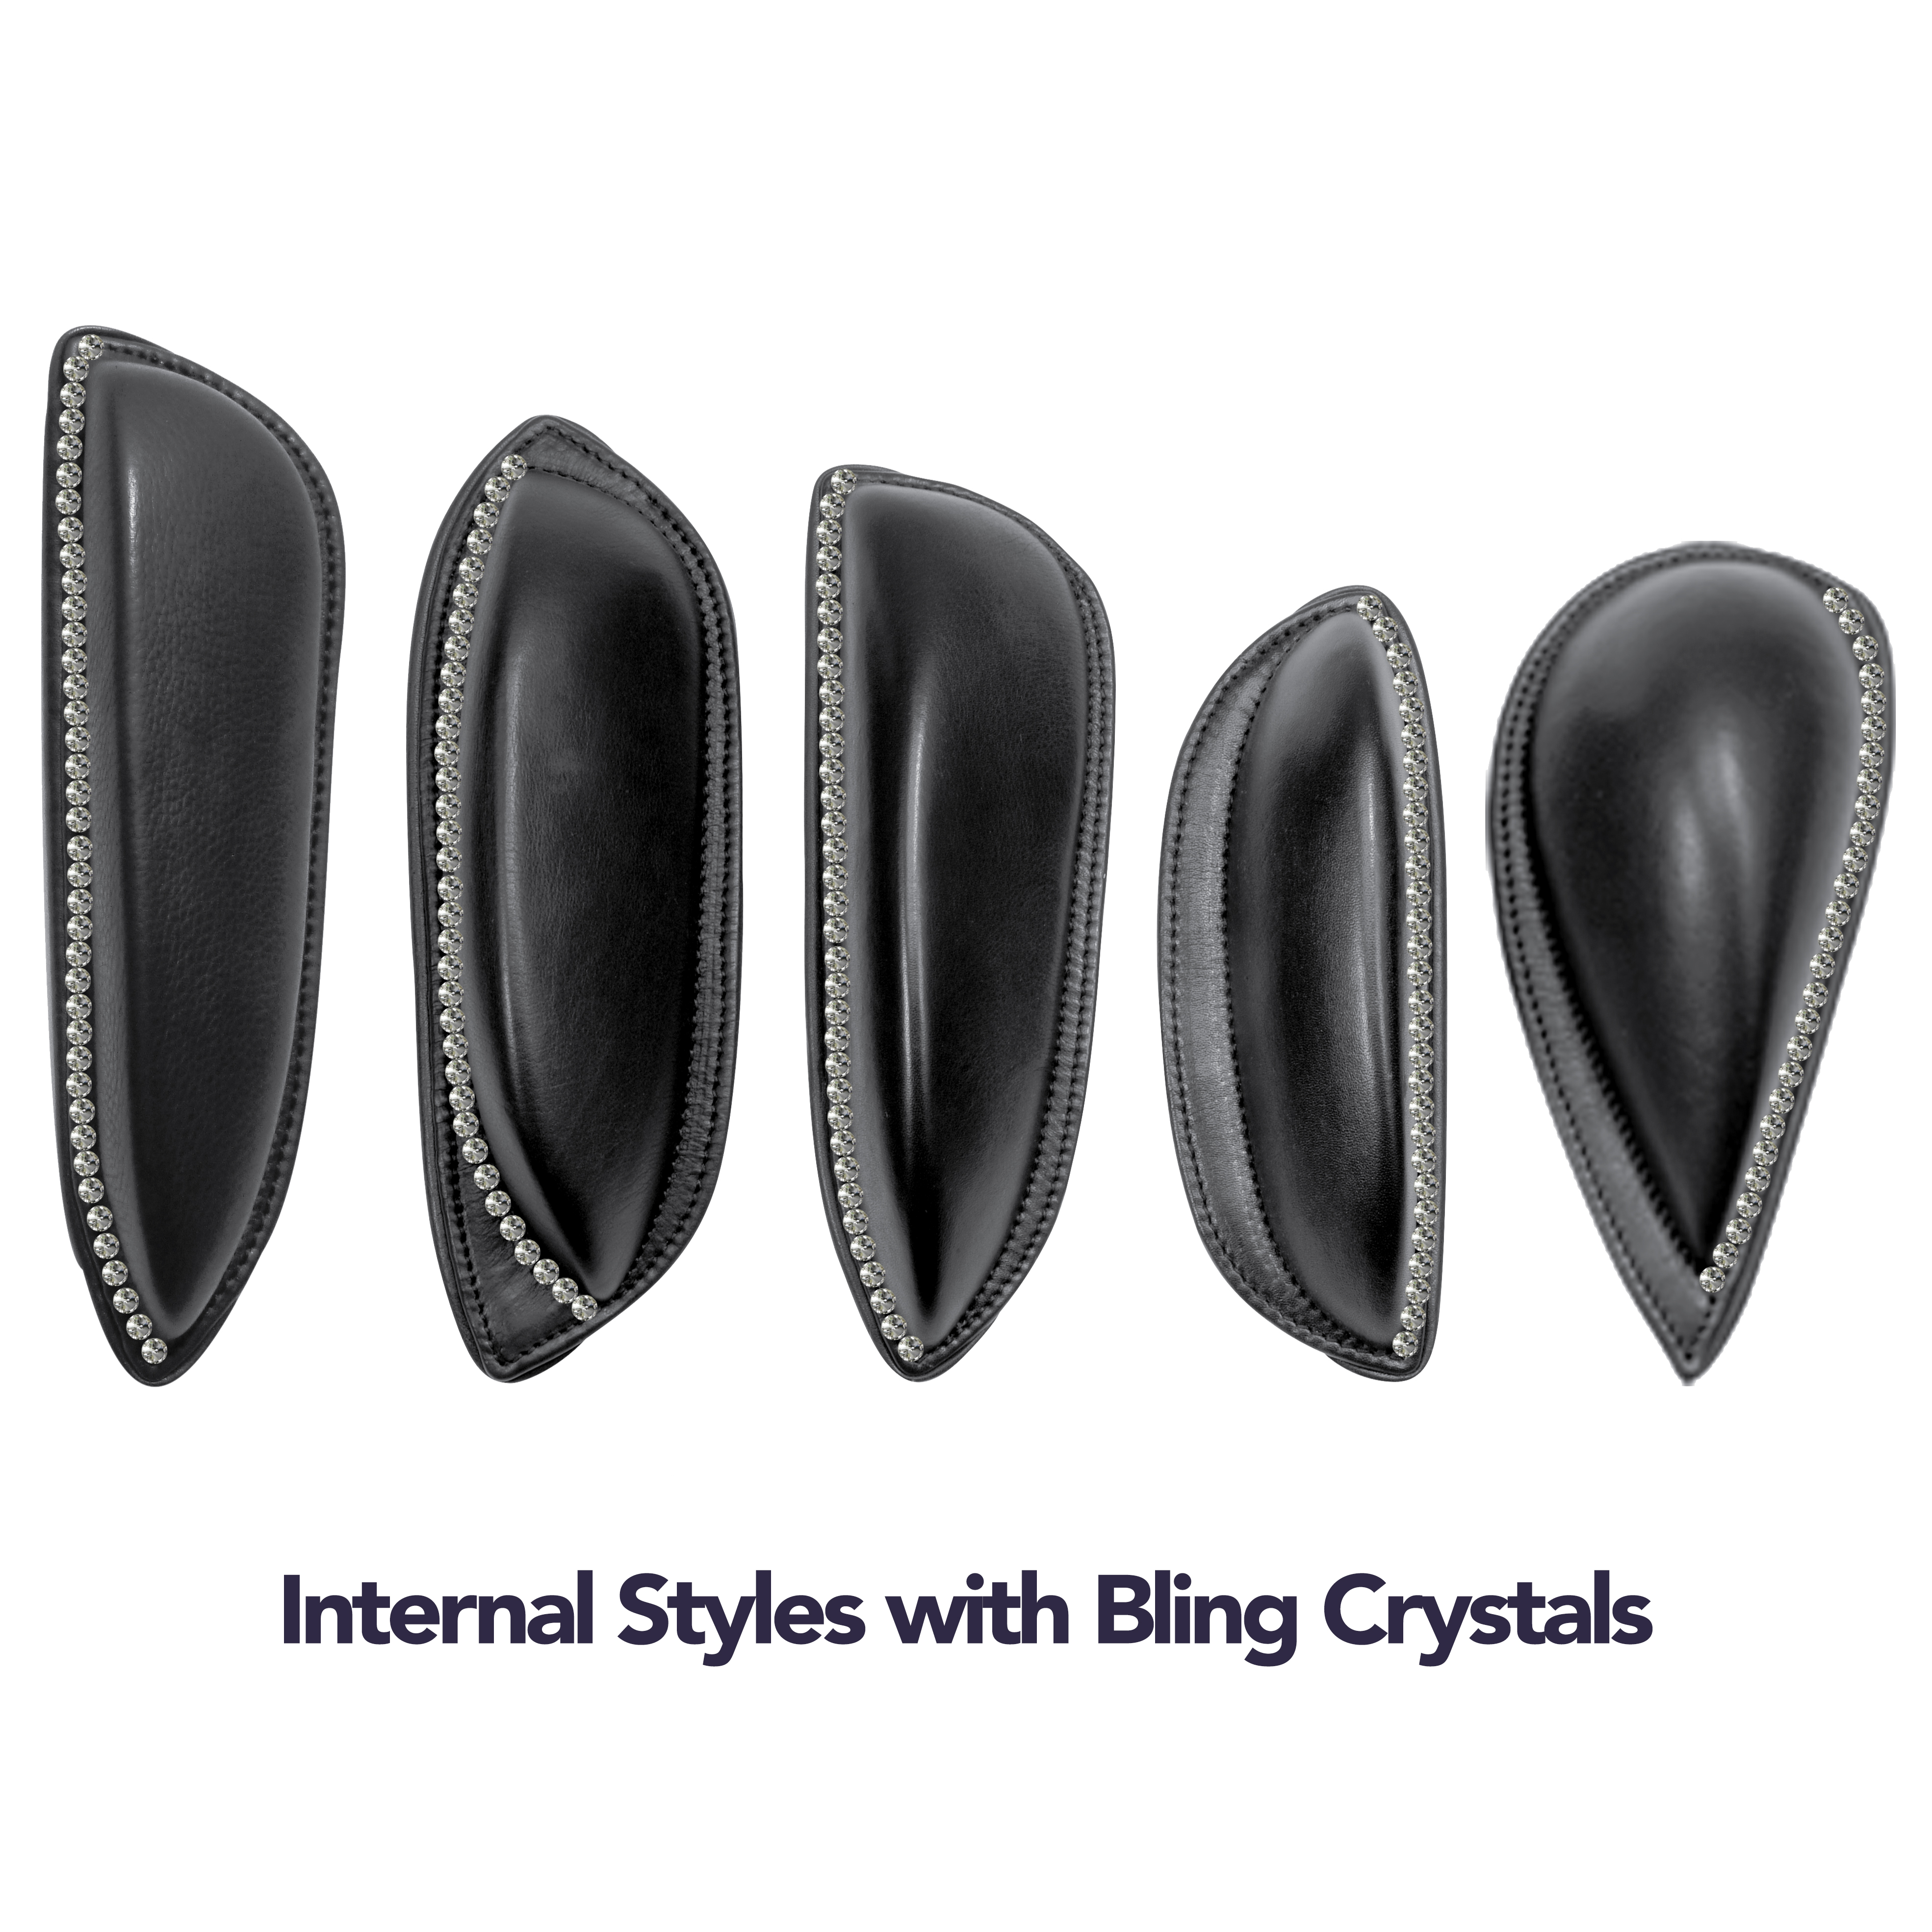 Internal Bling Thigh Rolls - 5 Styles